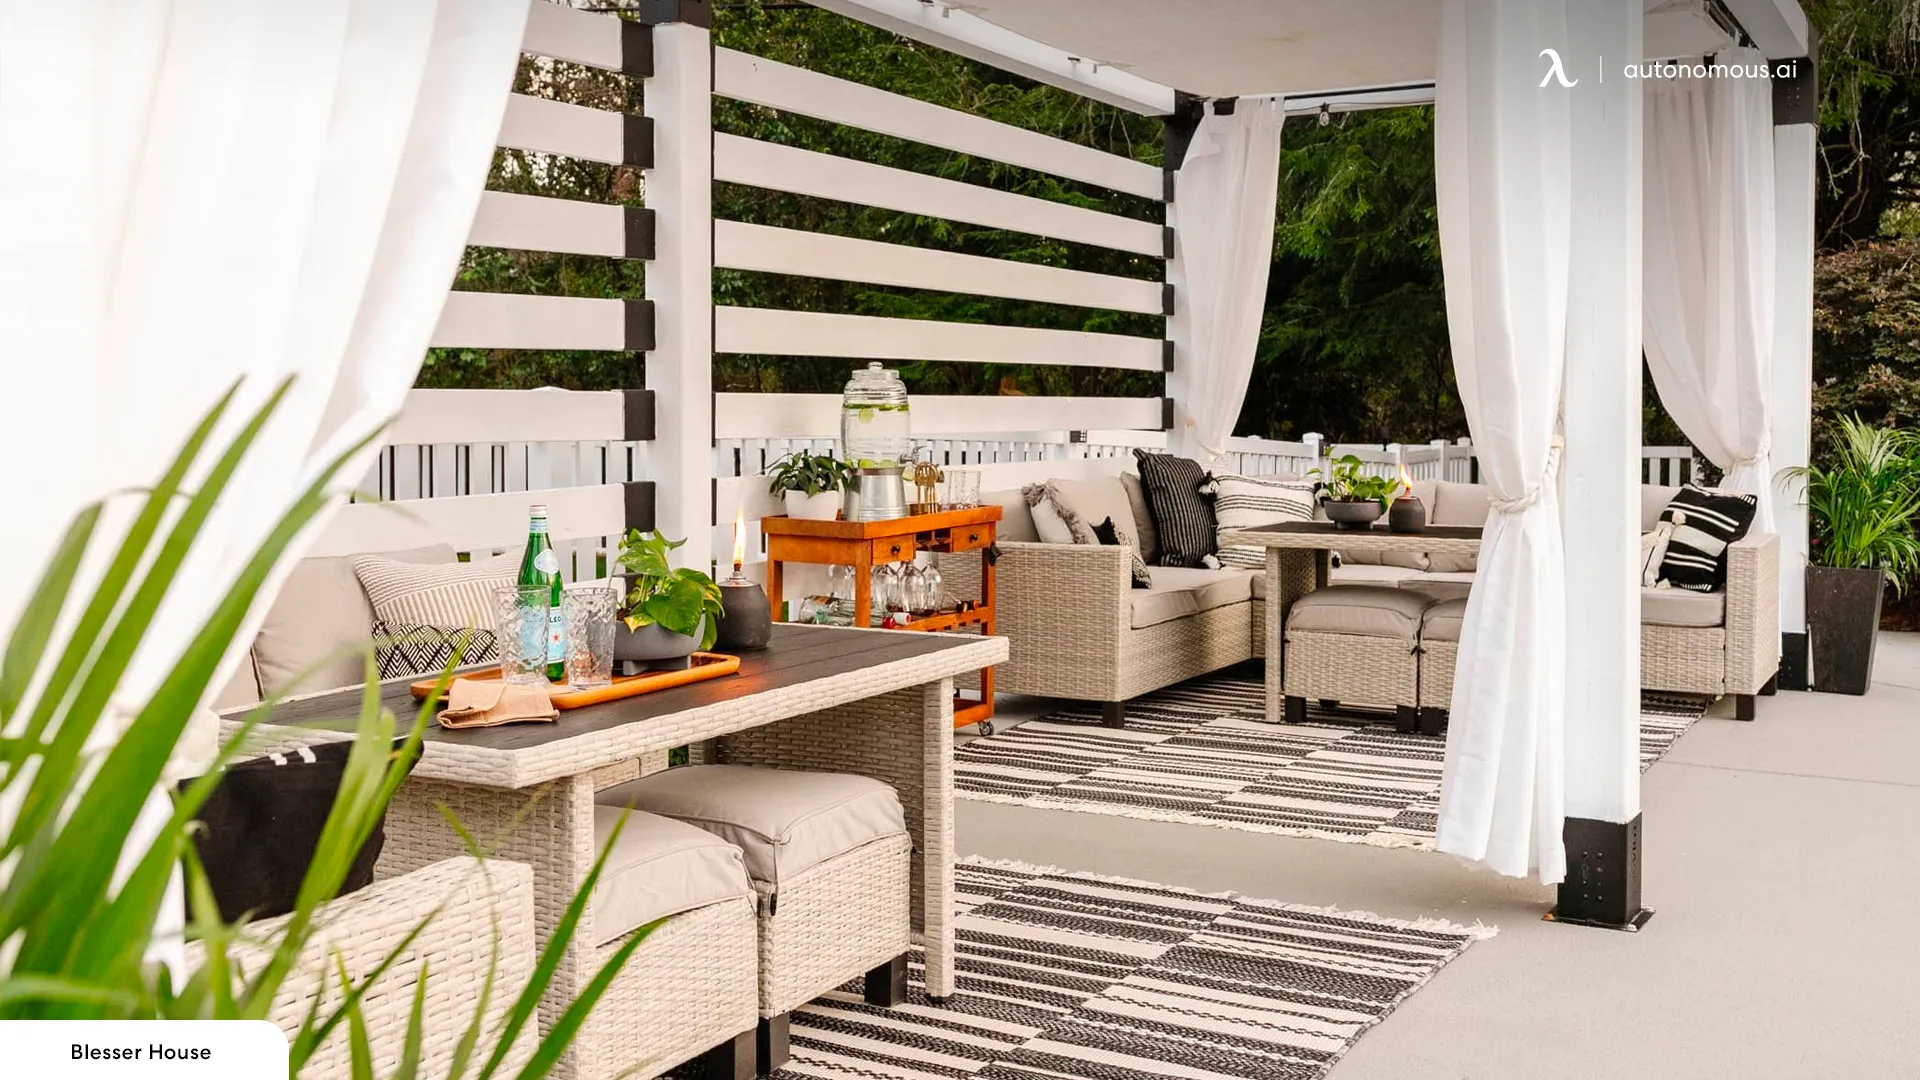 Comfortable Furniture - Backyard Cabana Ideas